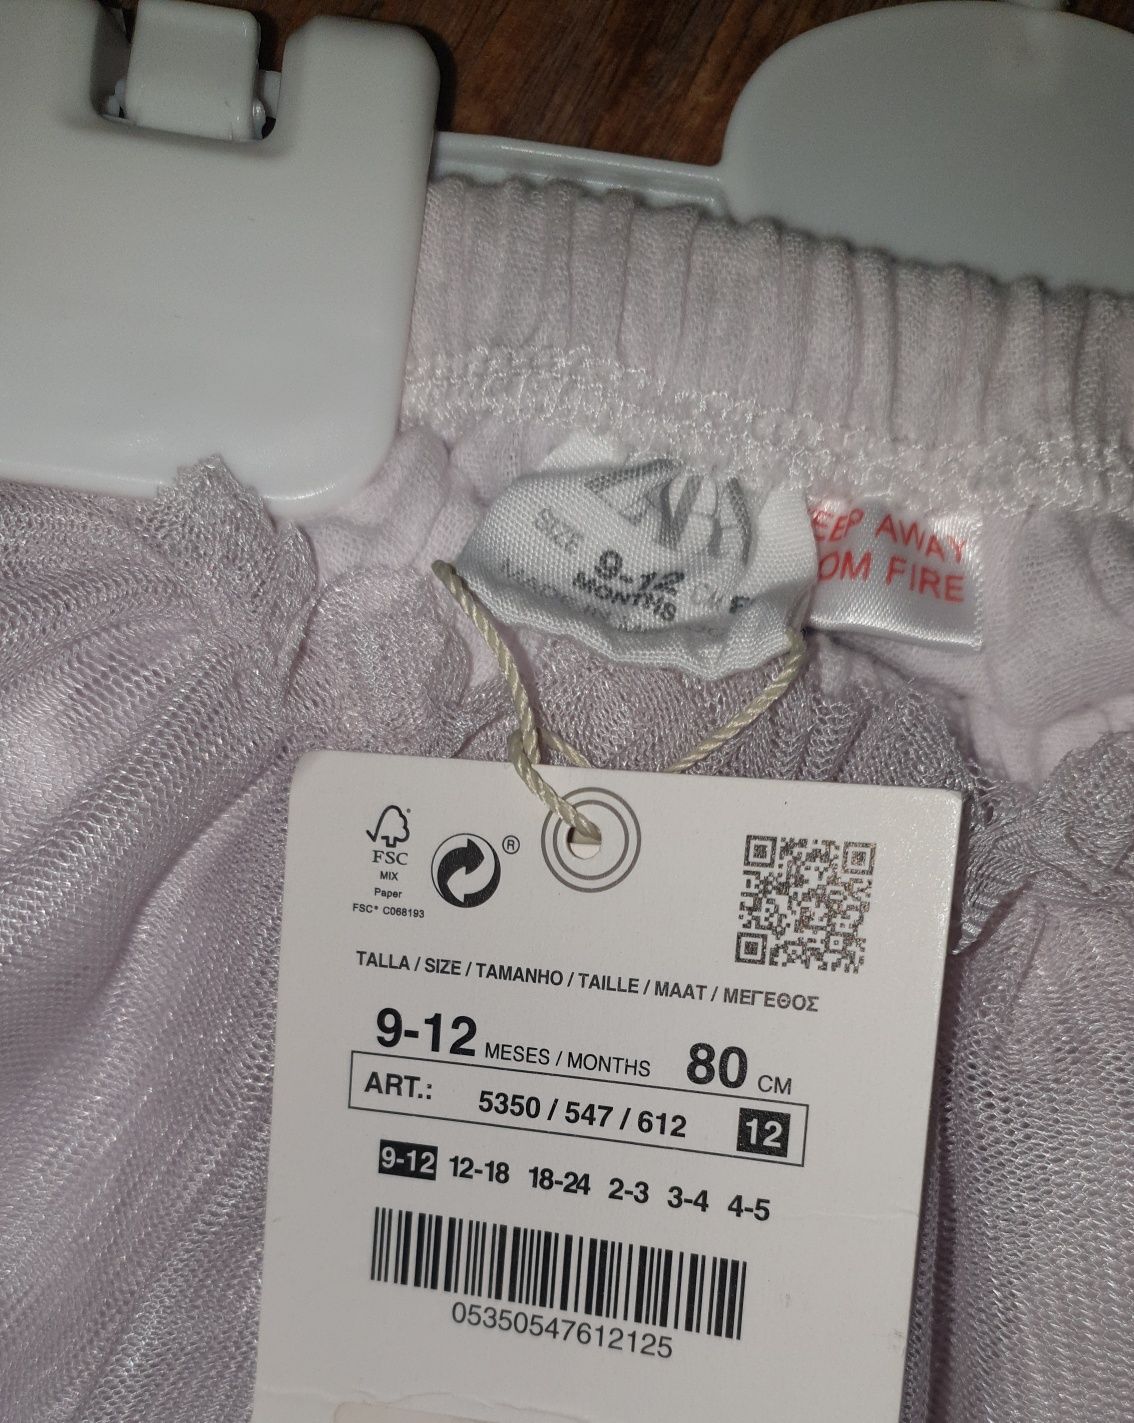 Пышная юбка из фатина ,,Zara,, р80 ( 9-12 месяцев)